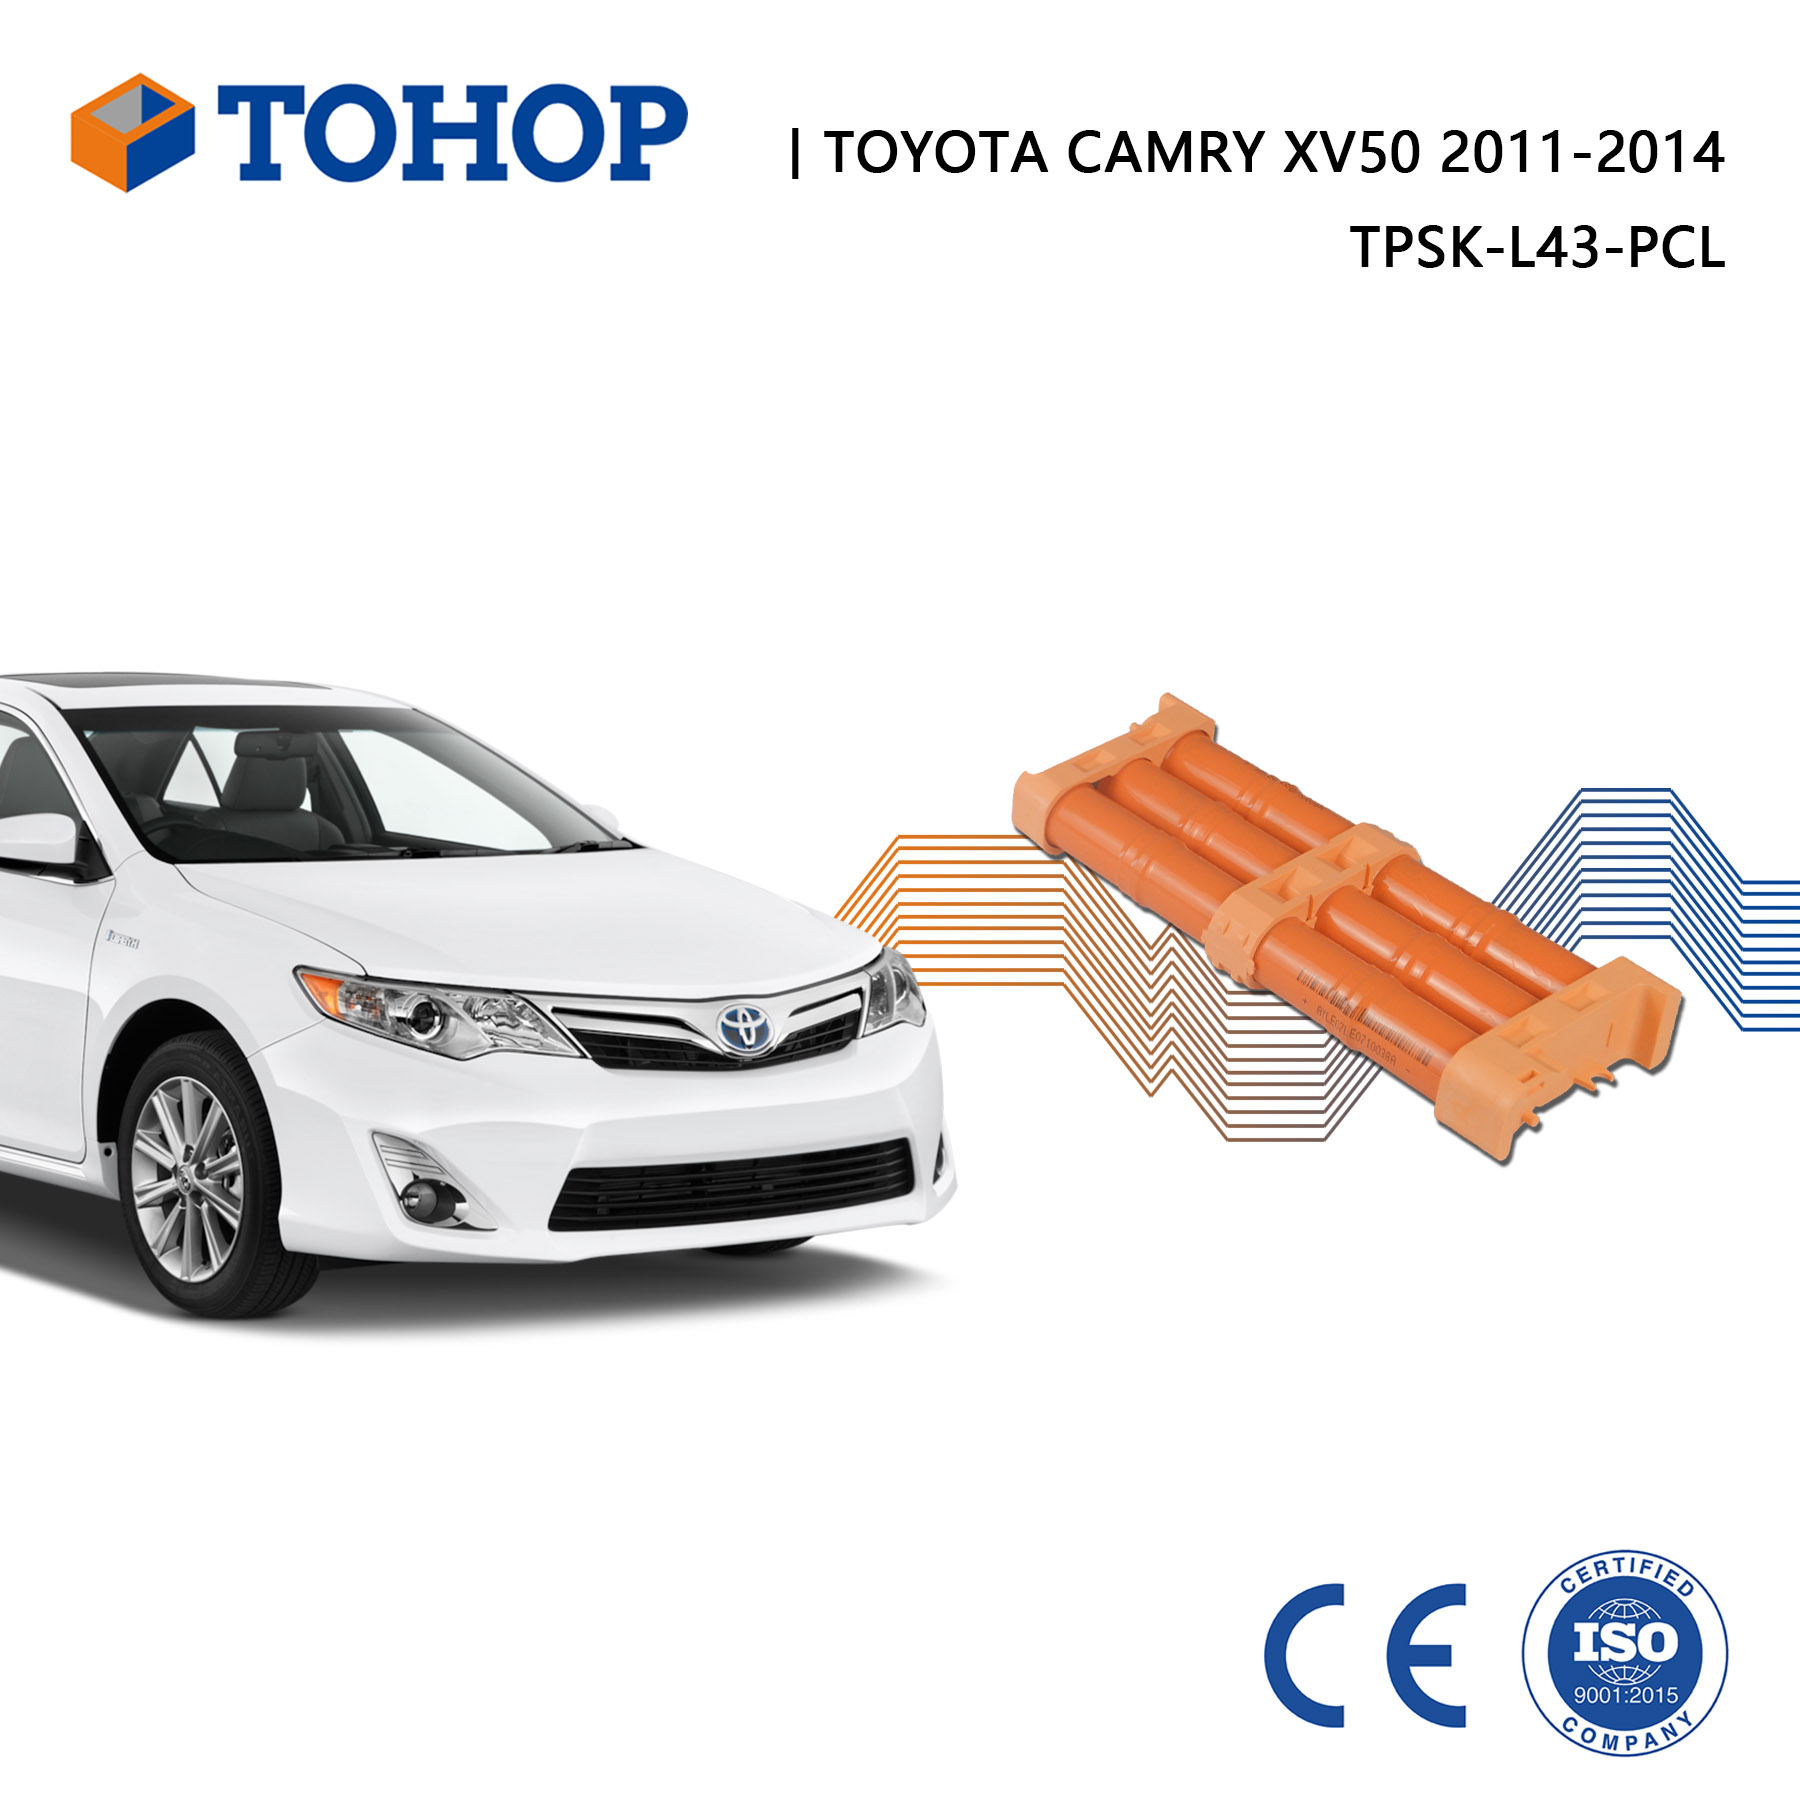 Batería híbrida para Toyota Camry